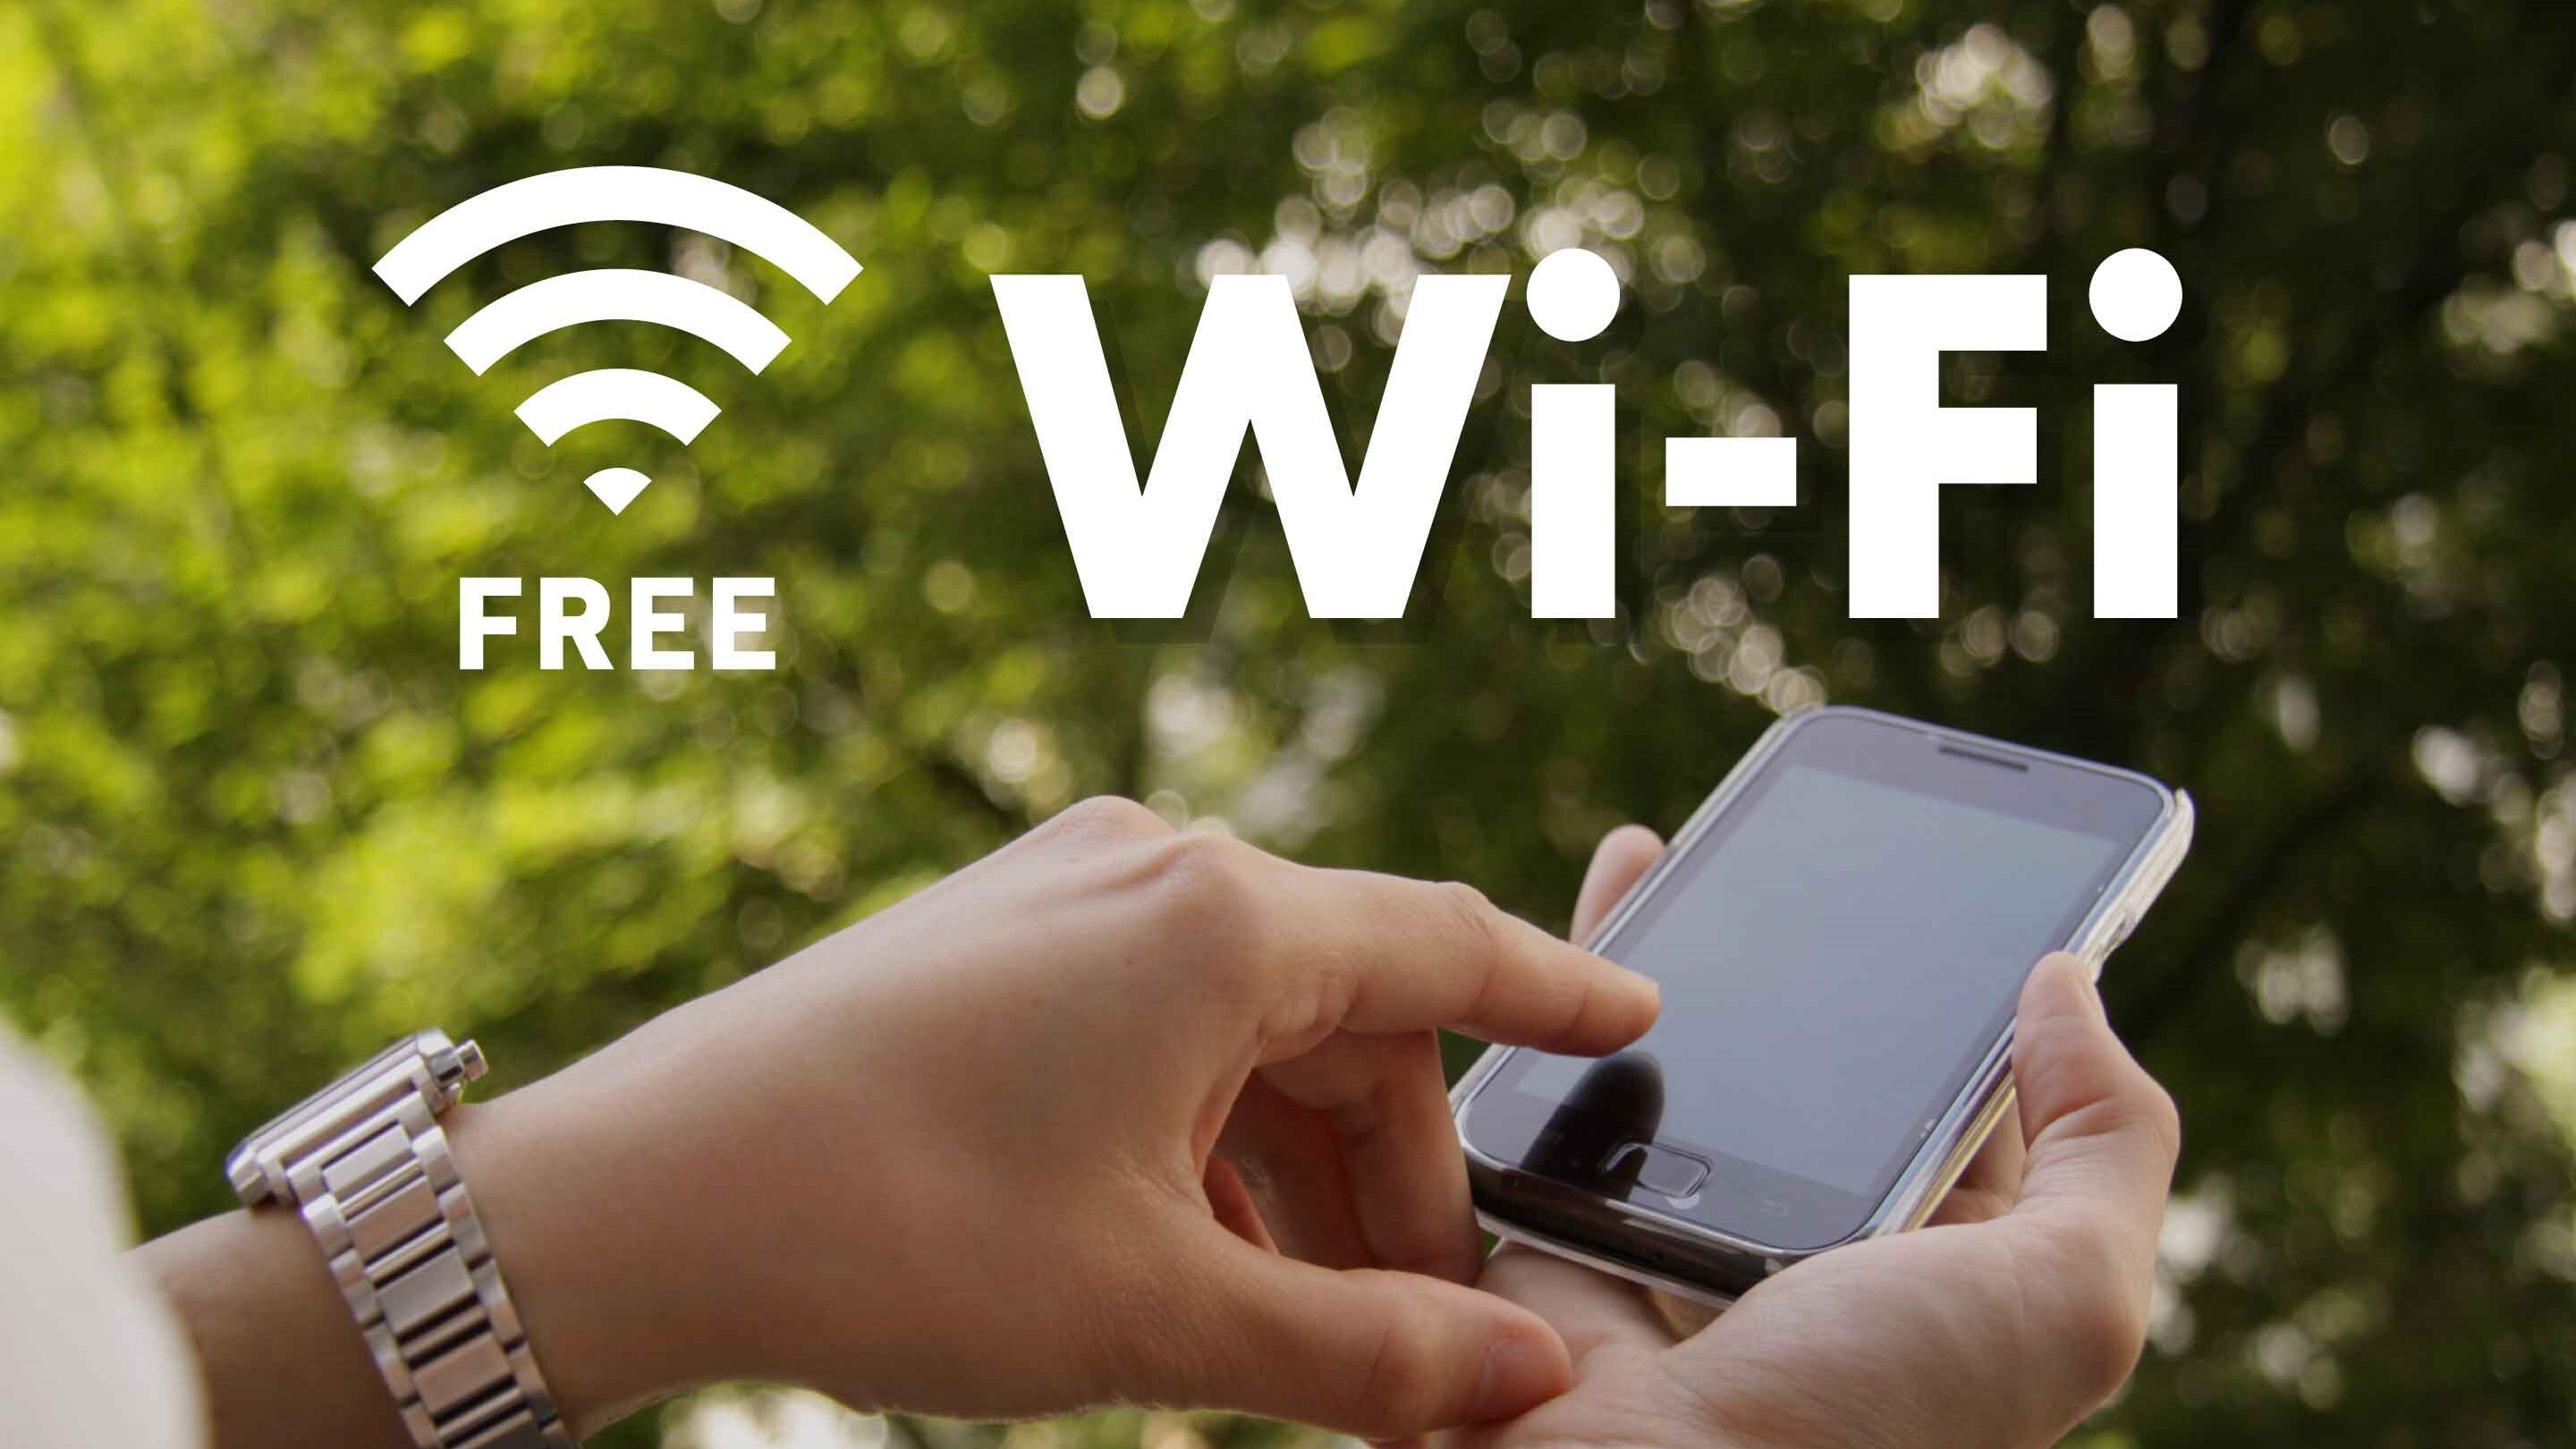 Wi-Fi 이용 가능(관내 전역·무료)